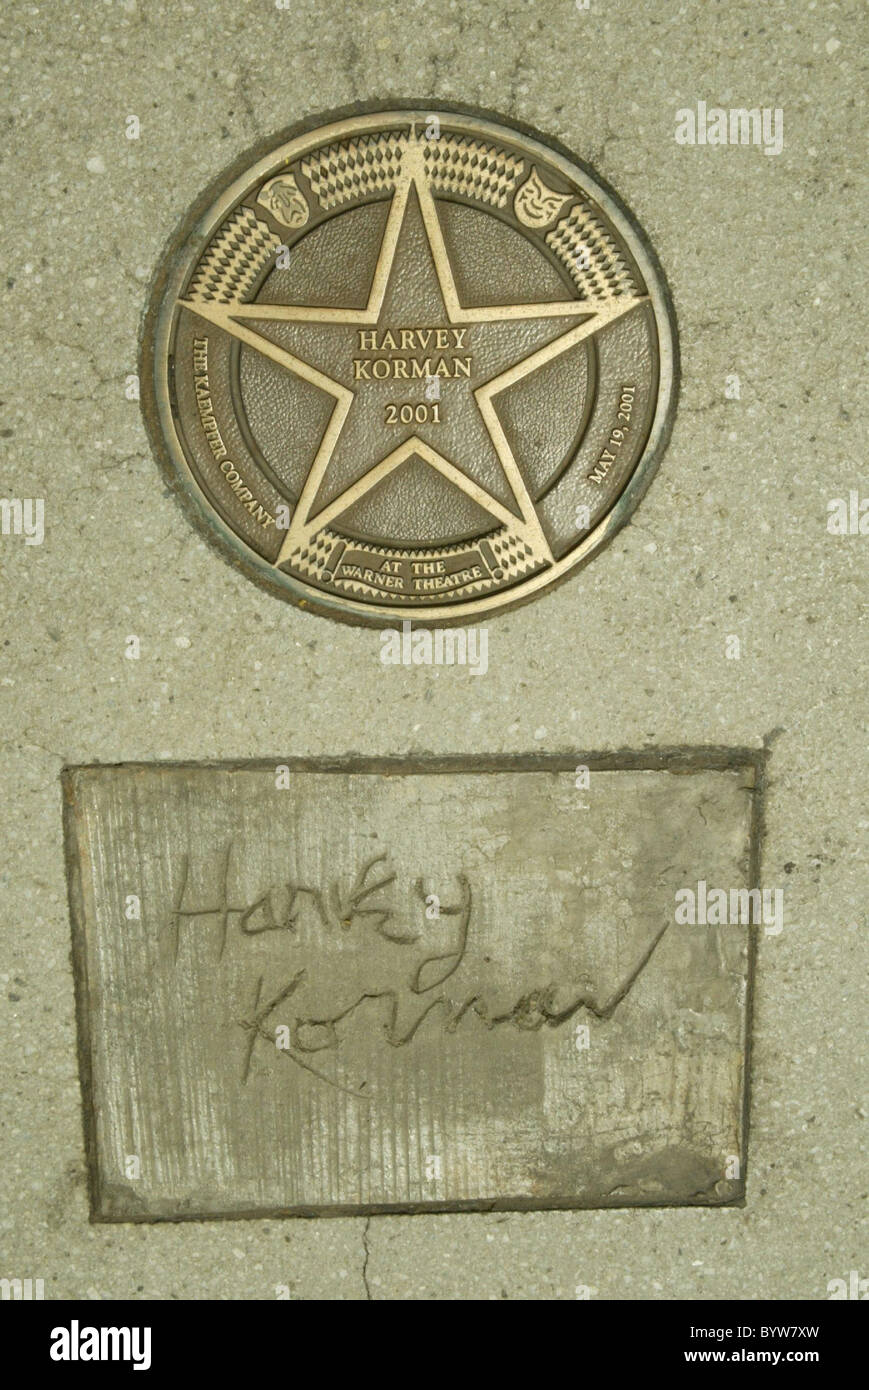 Harvey Korman The Warner Walk of Fame at the Warner Theatre Washington DC, USA - 24.06.07 Stock Photo